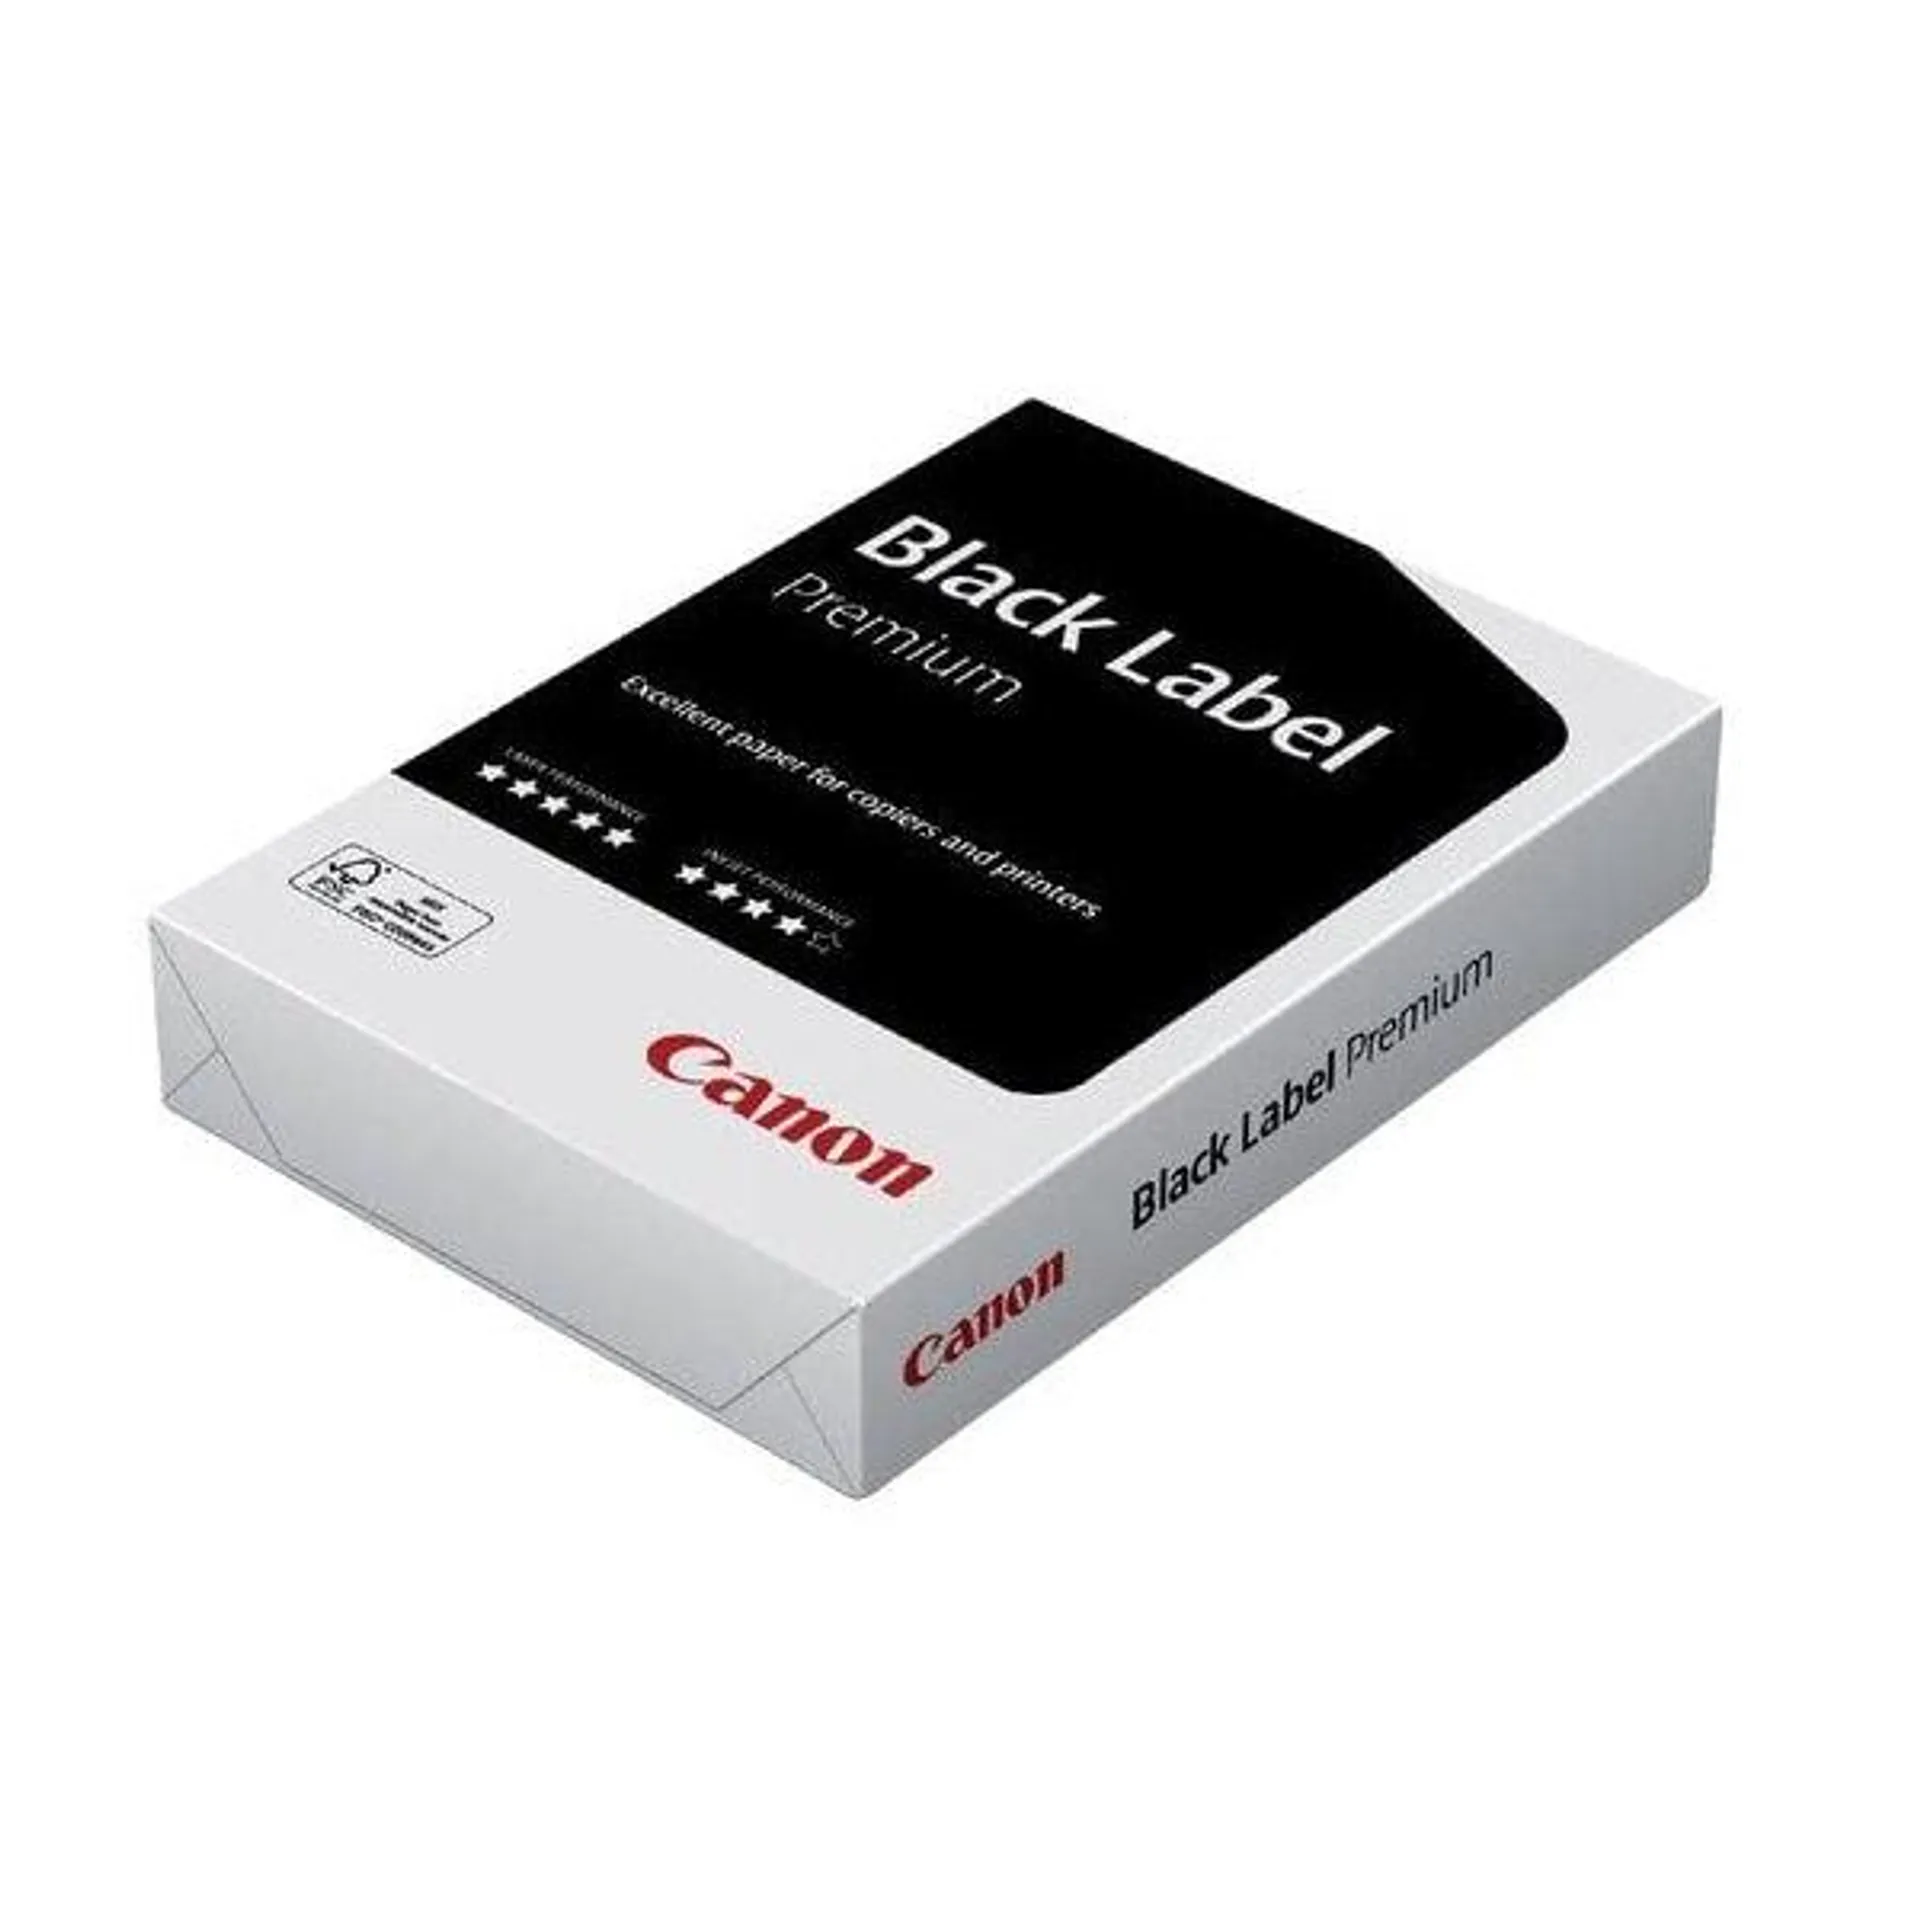 Canon Black Label Premium A4 75gsm FSC White Paper - (Pack of 1 x 500 Sheets) | 97001560